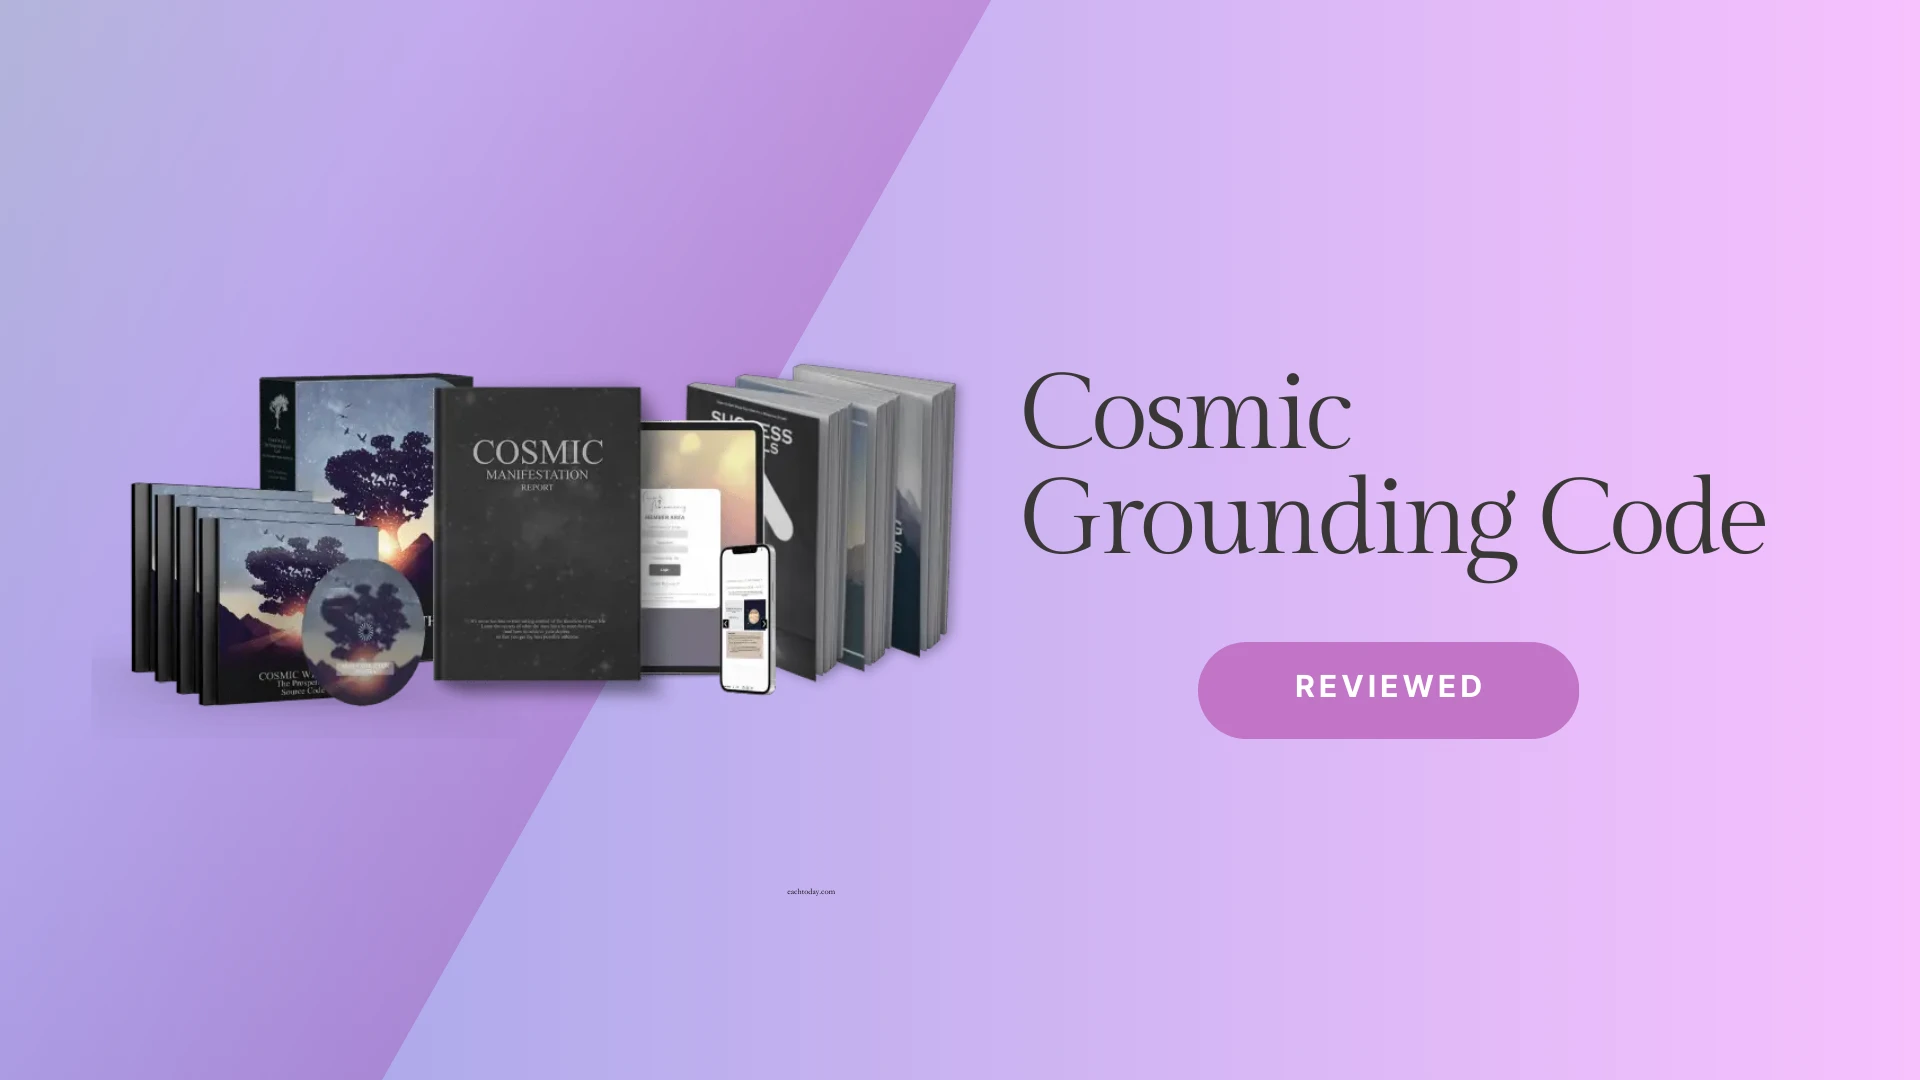 Cosmic Grounding Code Reviews